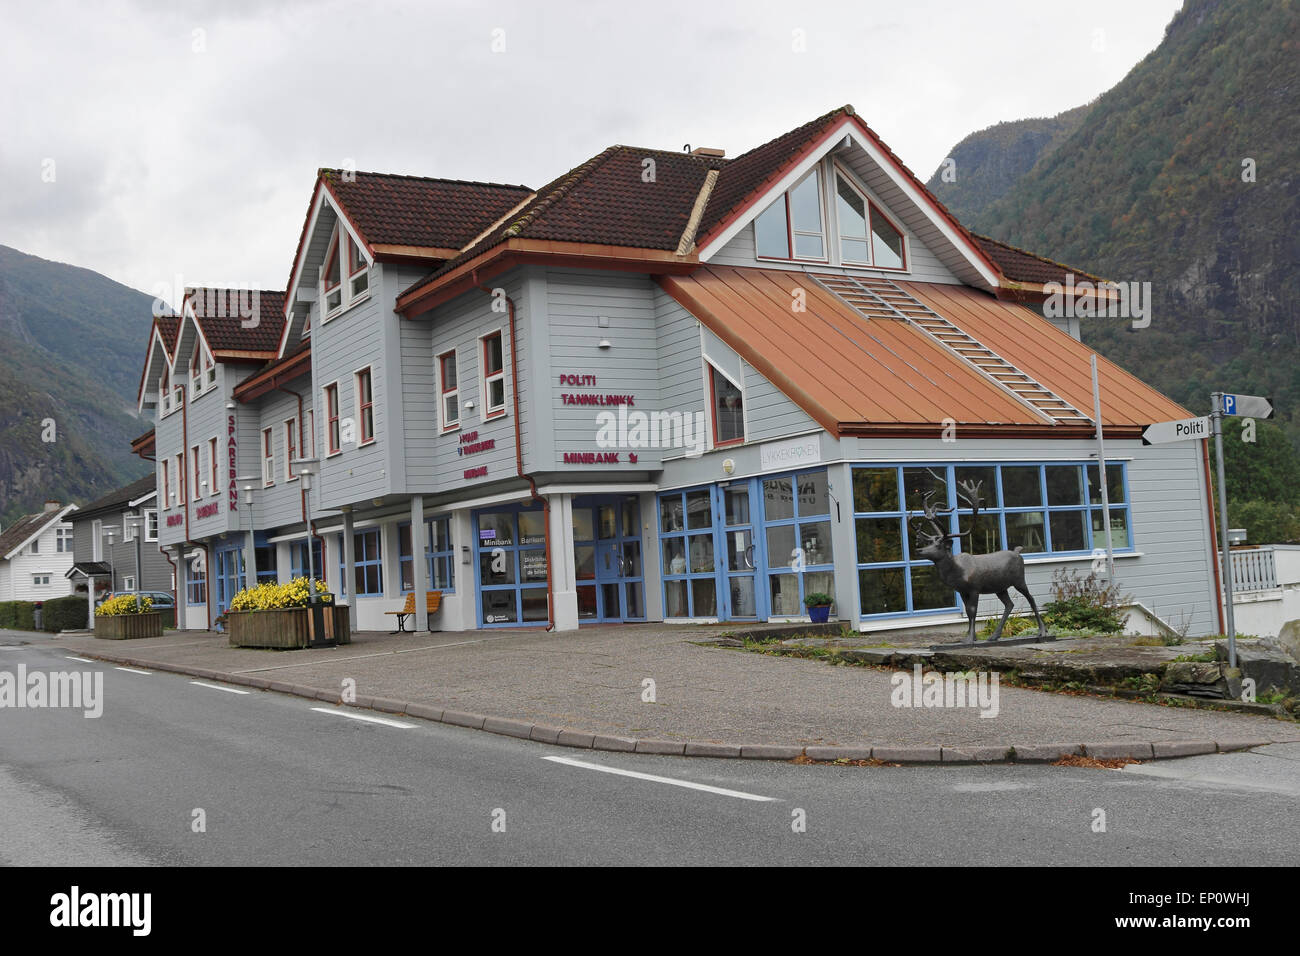 Olden, Norvegia - Polizia e savings bank building Foto Stock